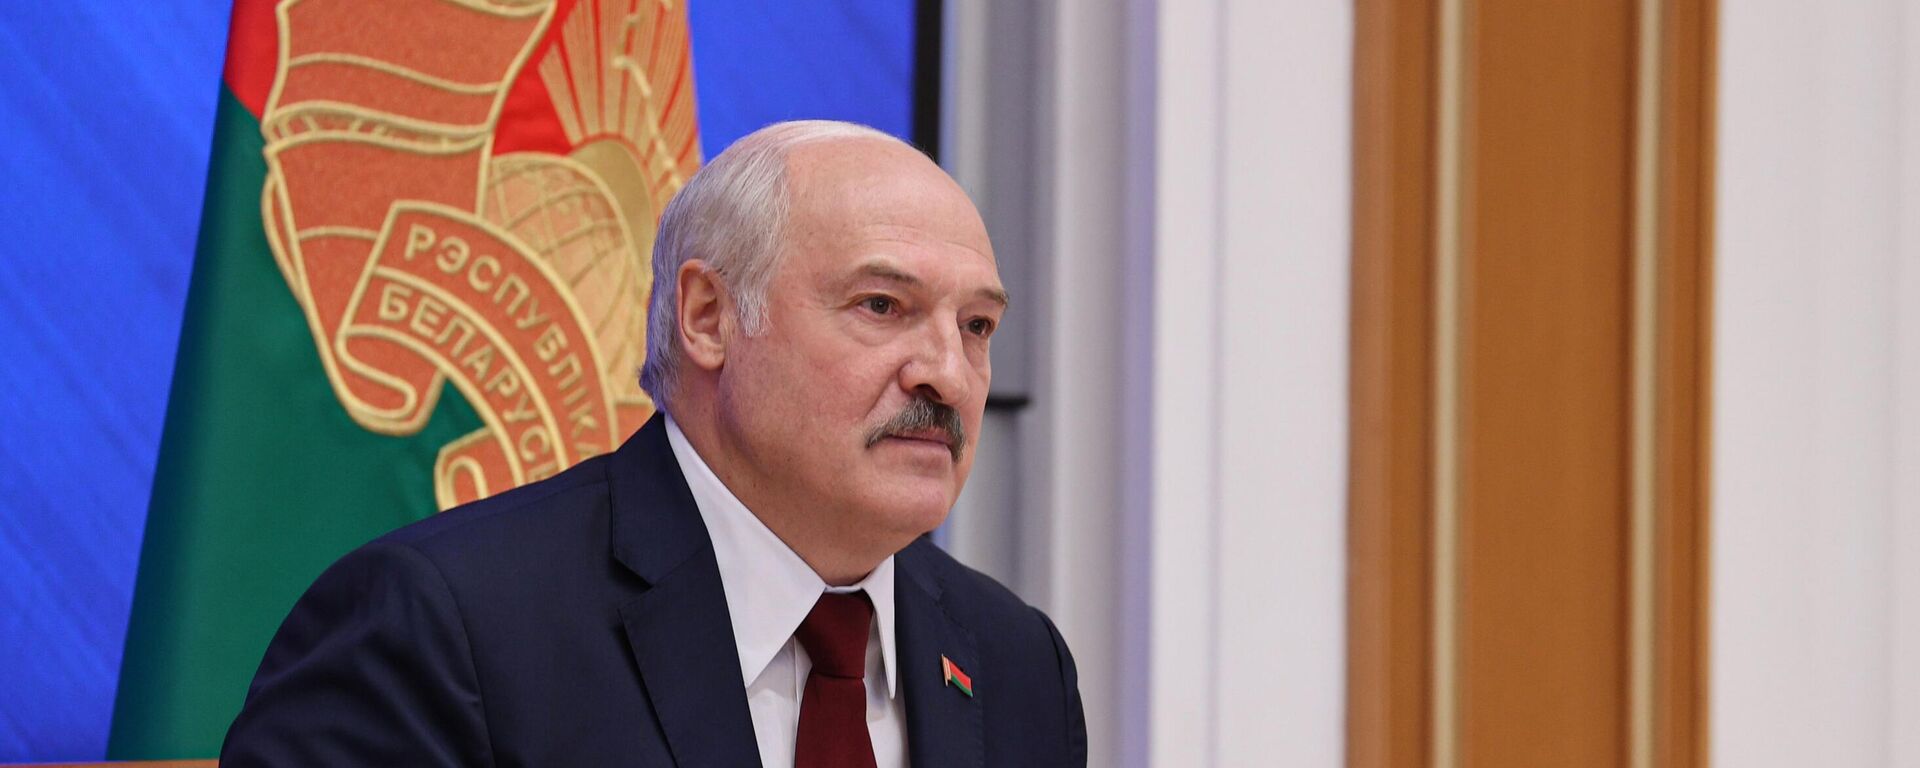 Baltarusijos prezidentas Aleksandras Lukašenka - Sputnik Lietuva, 1920, 13.08.2021